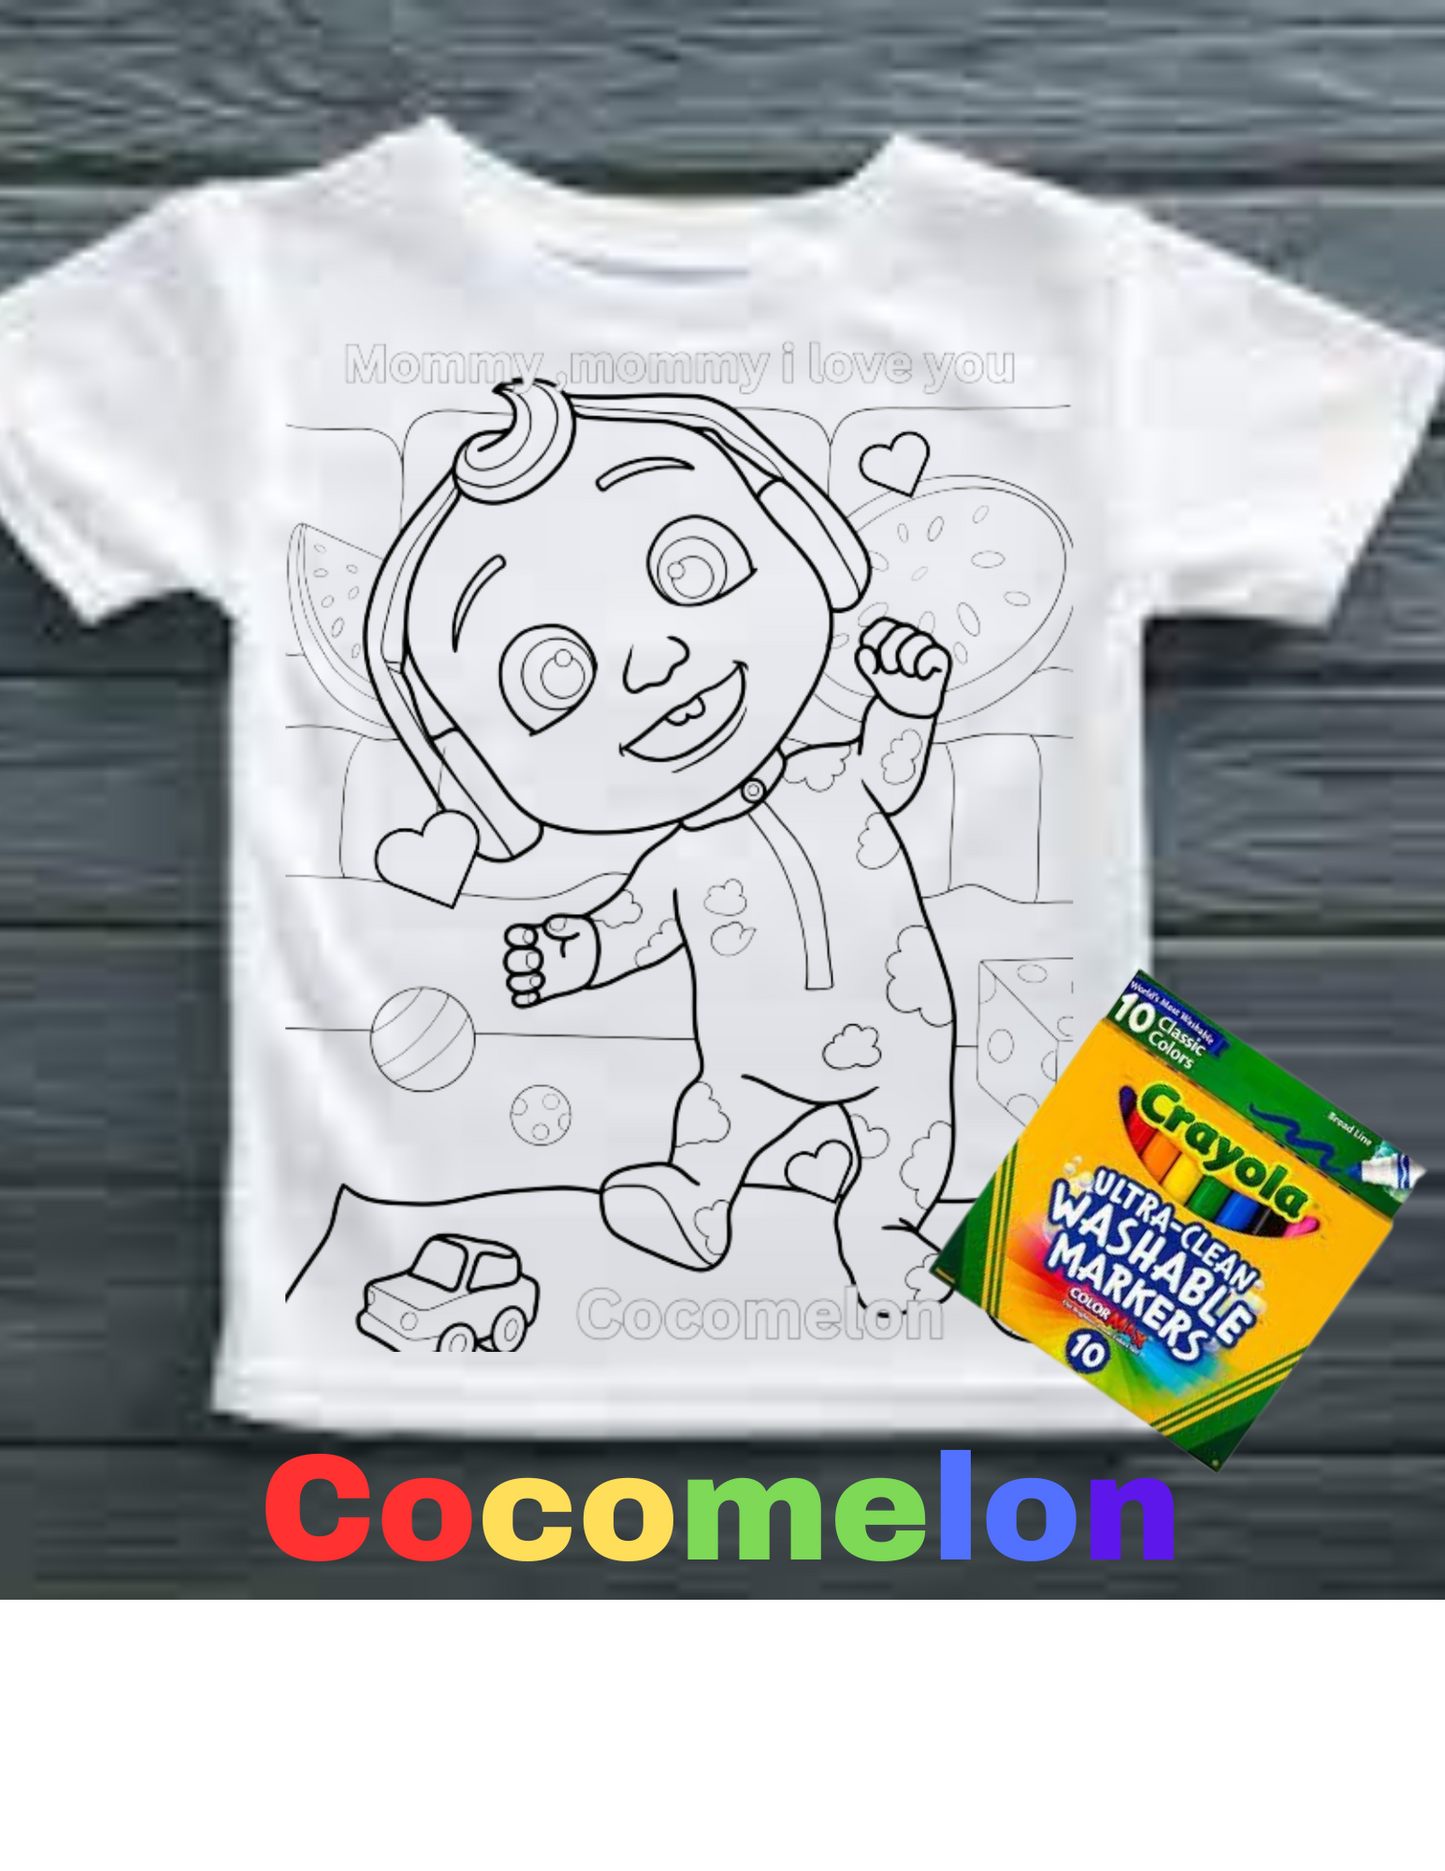 Cocomelon Coloring T'shirt